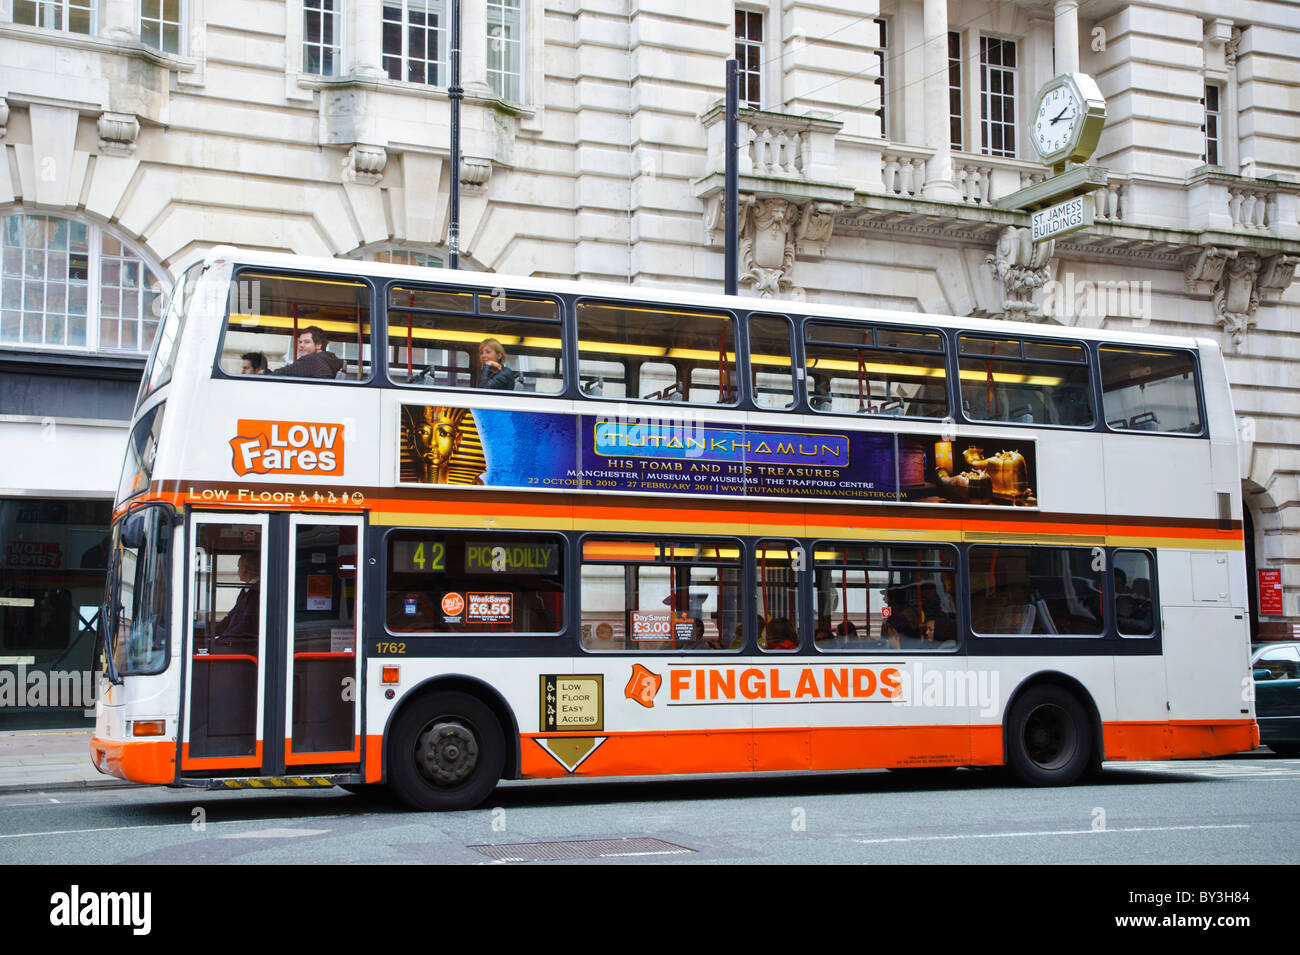 Finglands double decker bus on Deansgate, Manchester. Stock Photo